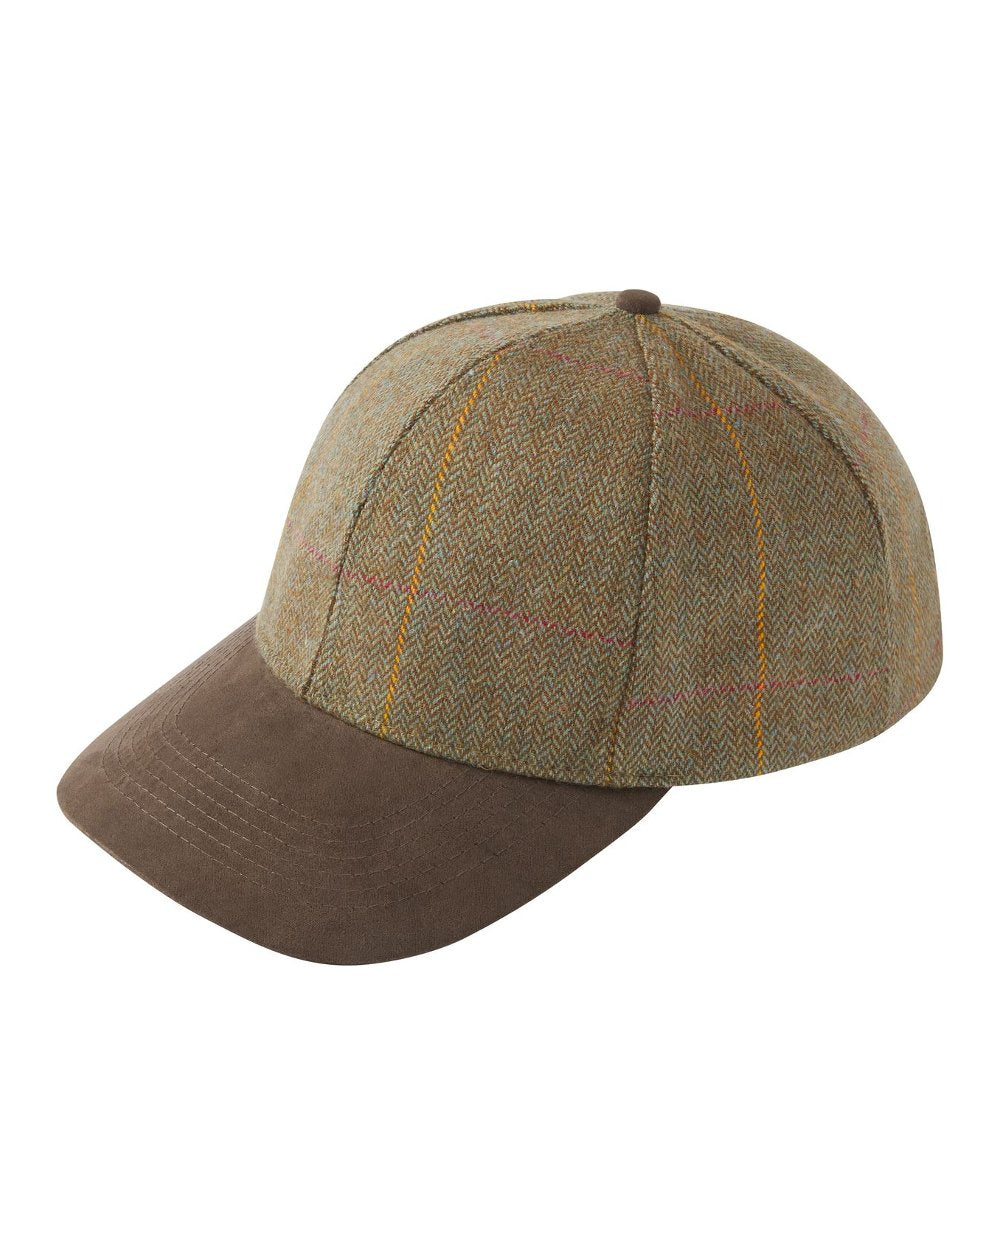 English Wool Tweed Baseball Cap with Leather Peak - Brown - Hills Hats